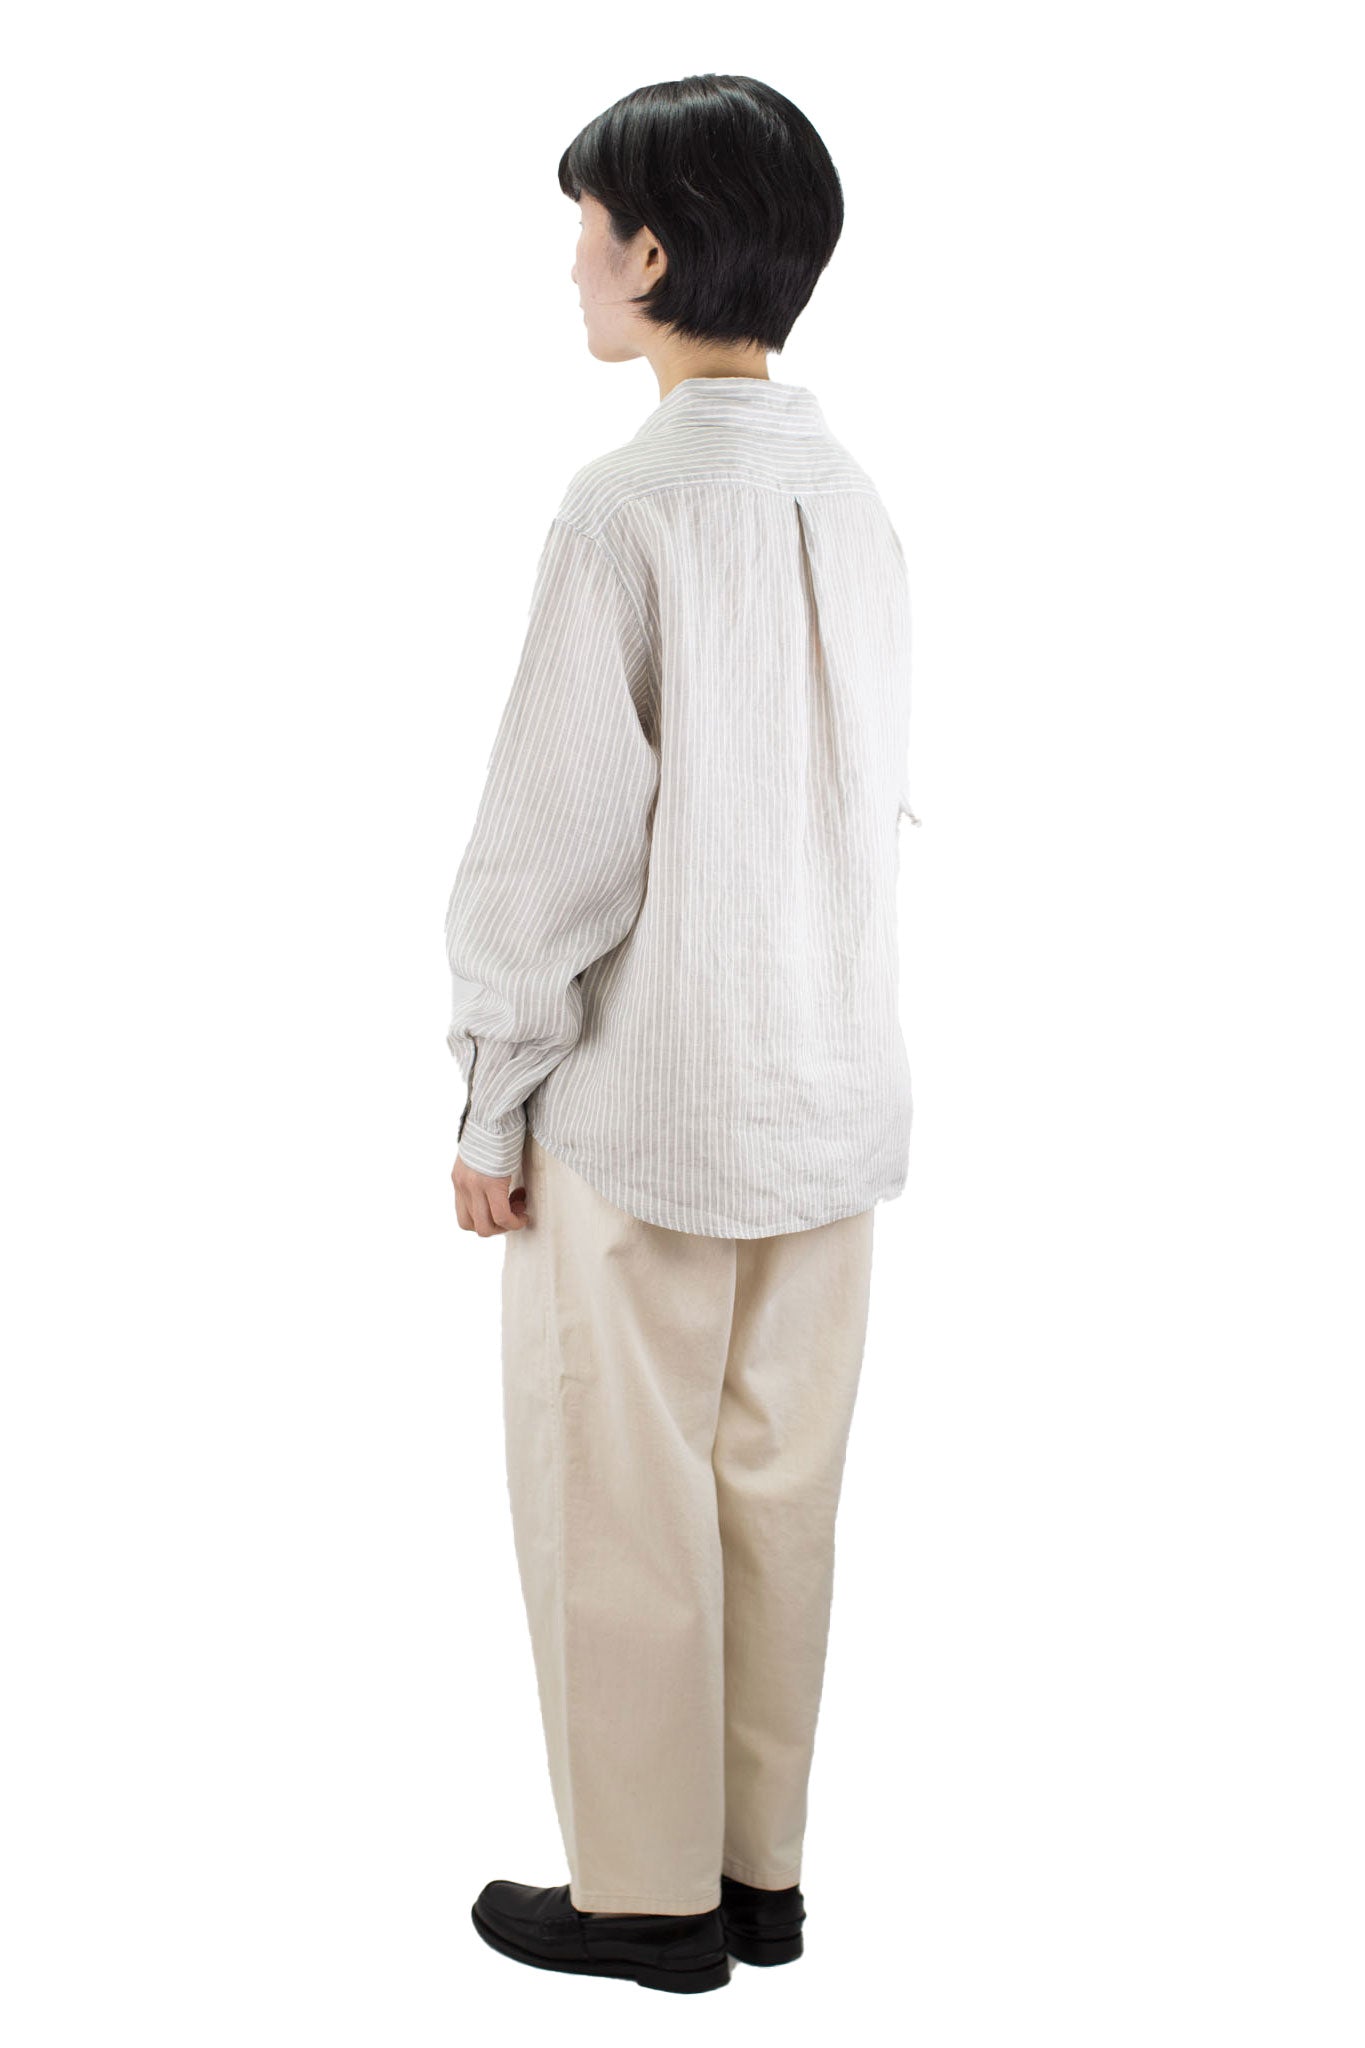 Danton Woman's Linen Round Collar Long Sleeve Shirt - Ecru with Grey Stripe